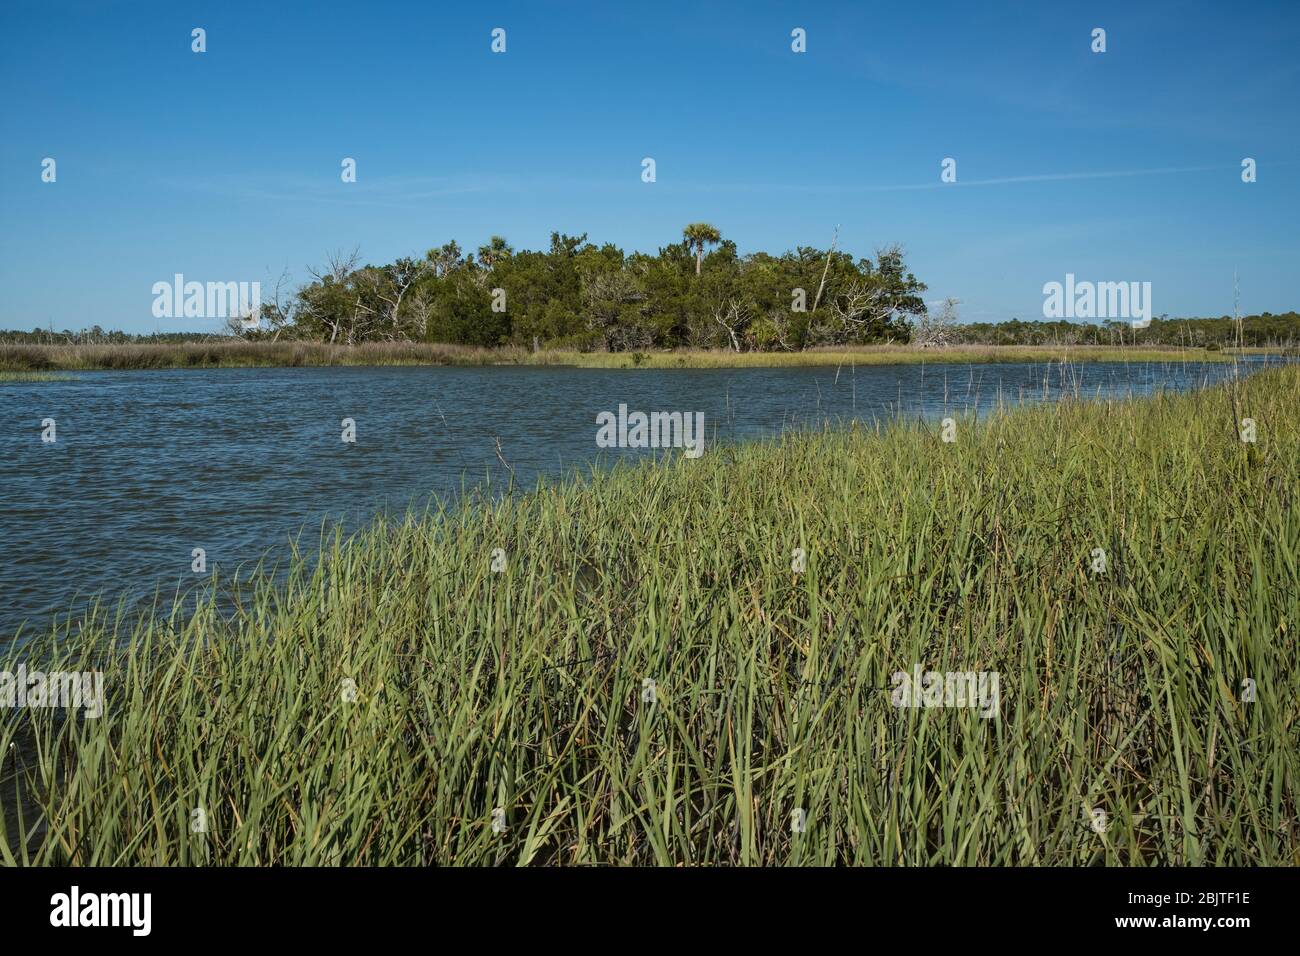 Florida Salt Marsh. Gulf Coast near Yankeetown, Florida. scenic coastal tidal salt marsh with rush, grass, trees. Natural Florida coastal community. Stock Photo